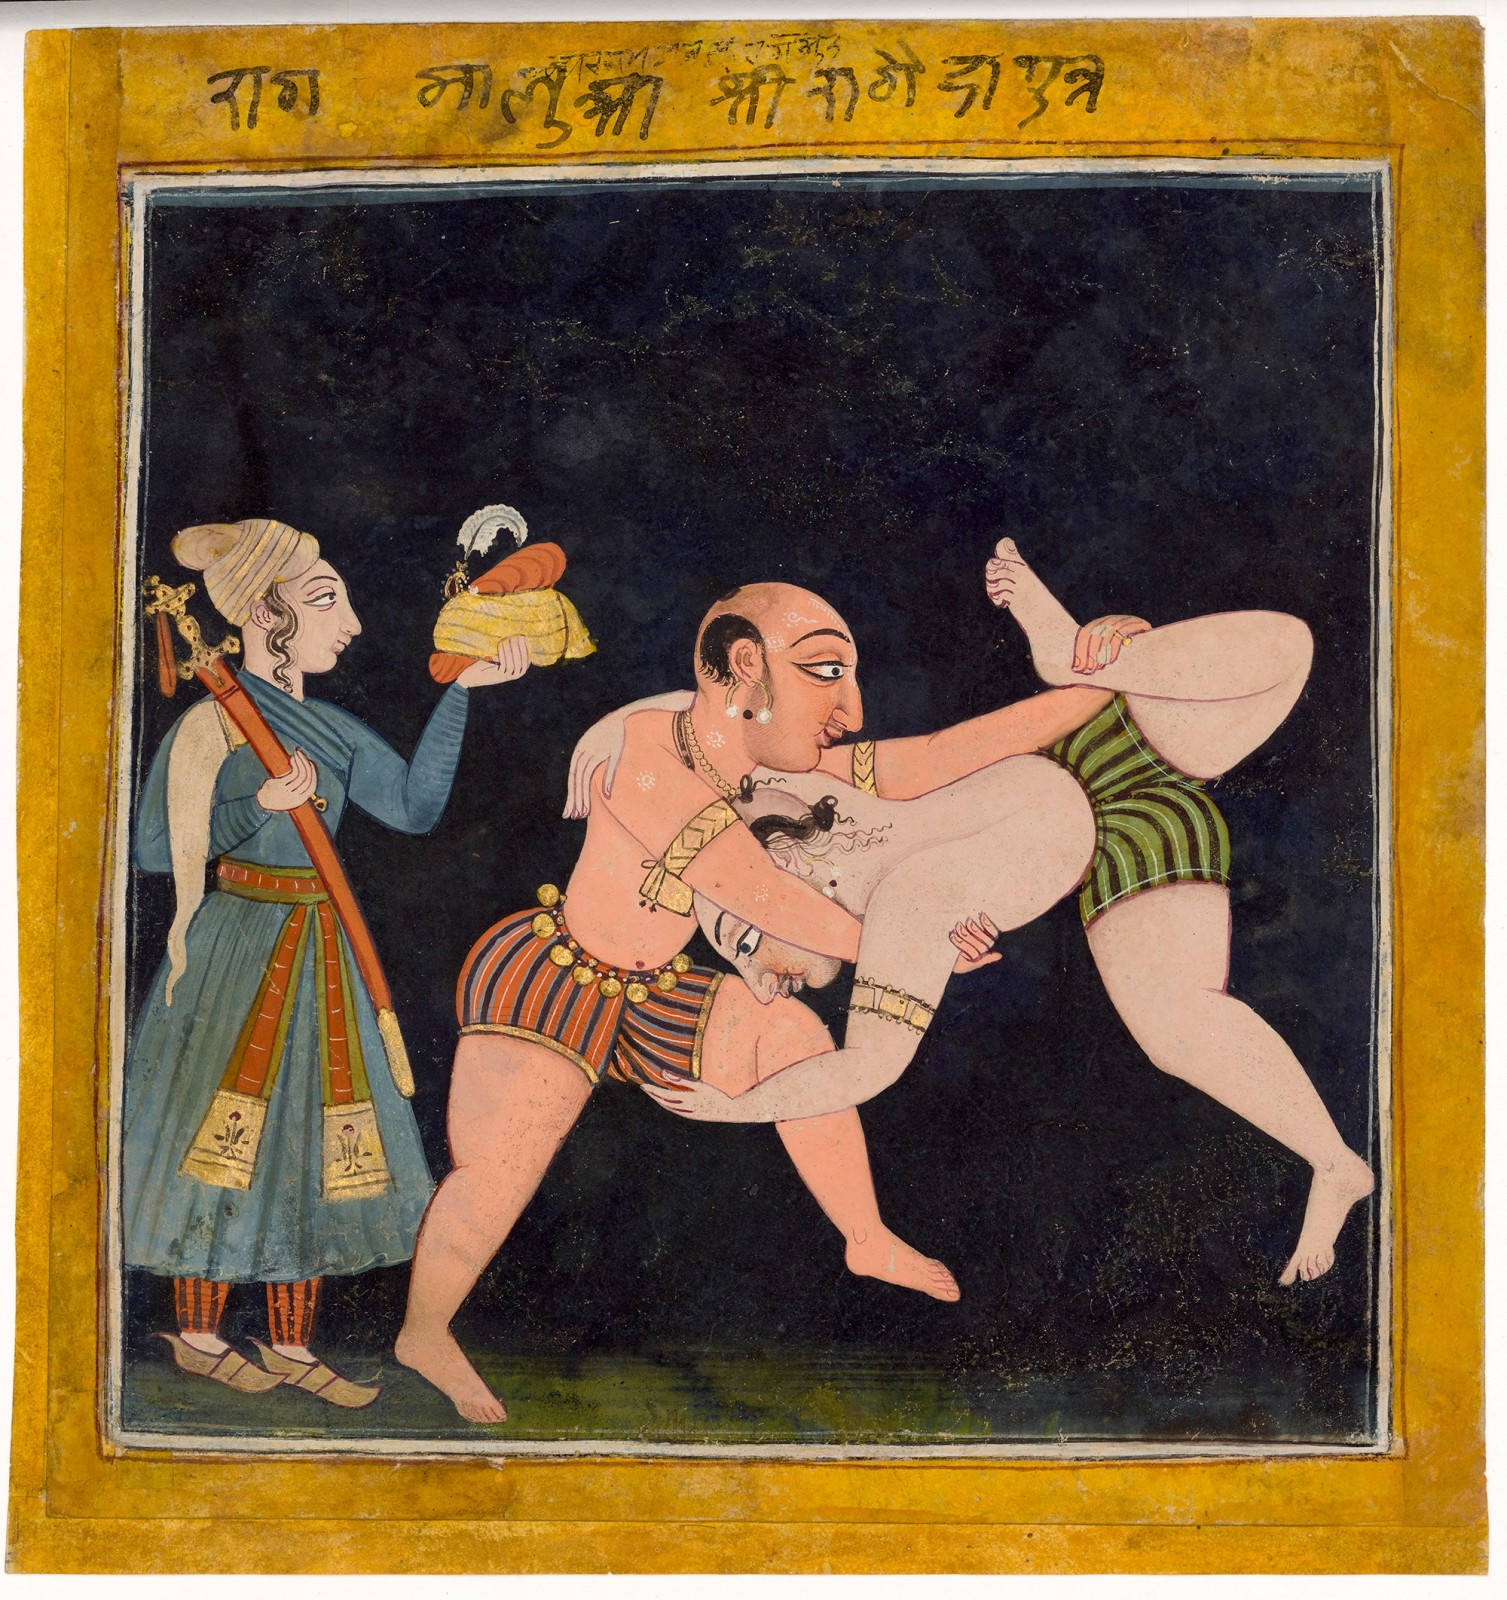 Two men wrestling - Ragaputra Malava, son of Sri Raga, Page from the ‘Tandan’ Ragamala, Basohli, c. 1710